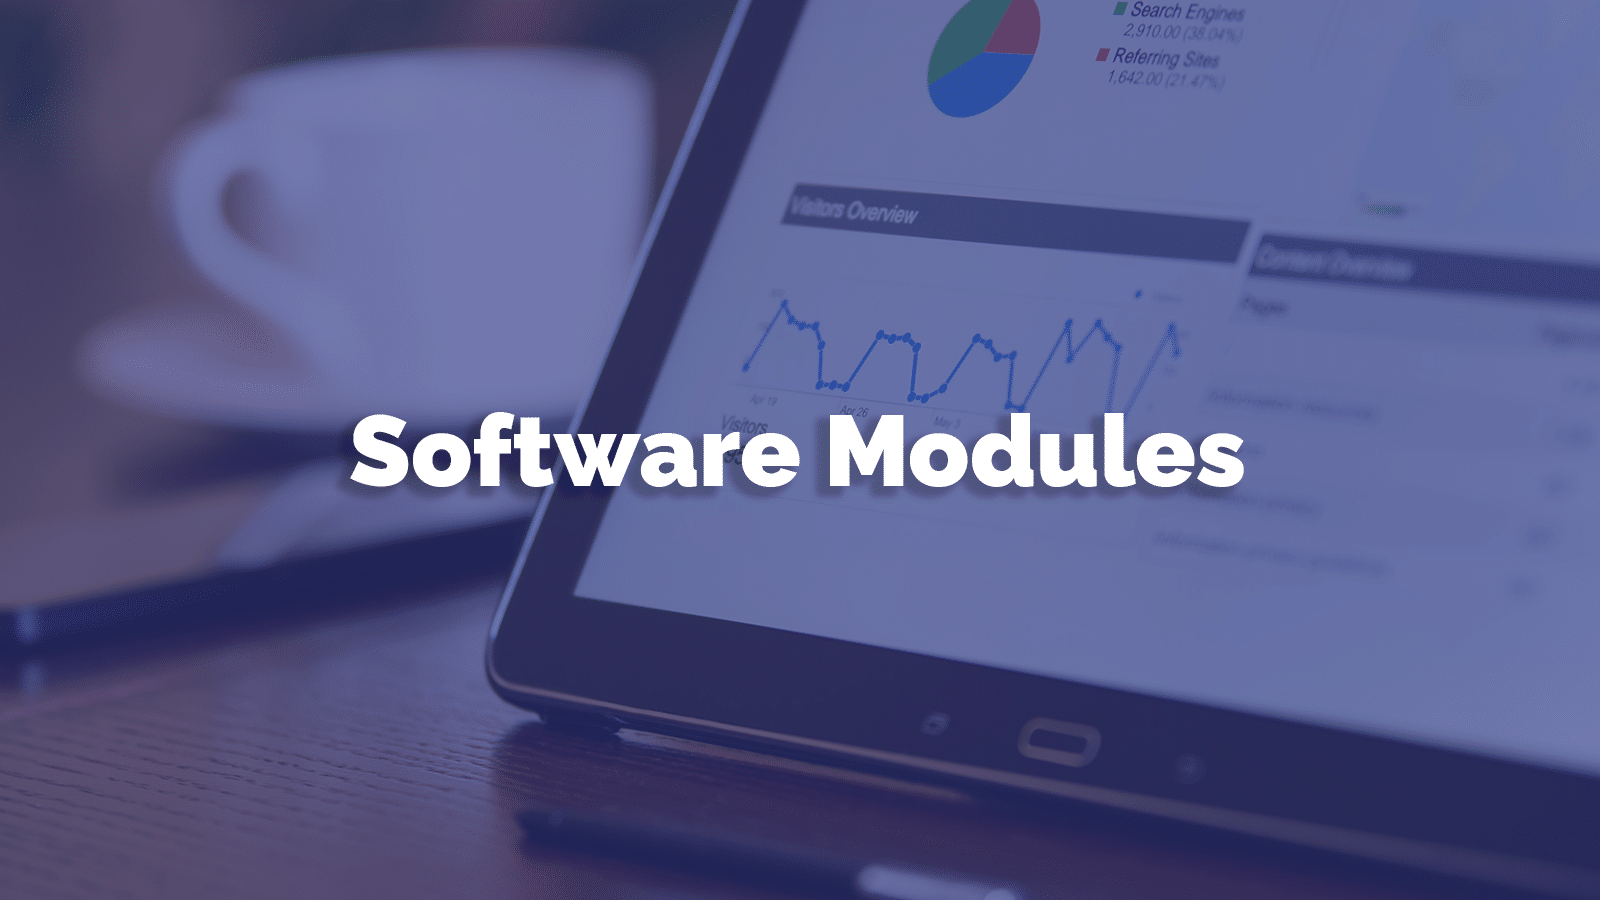 Software modules